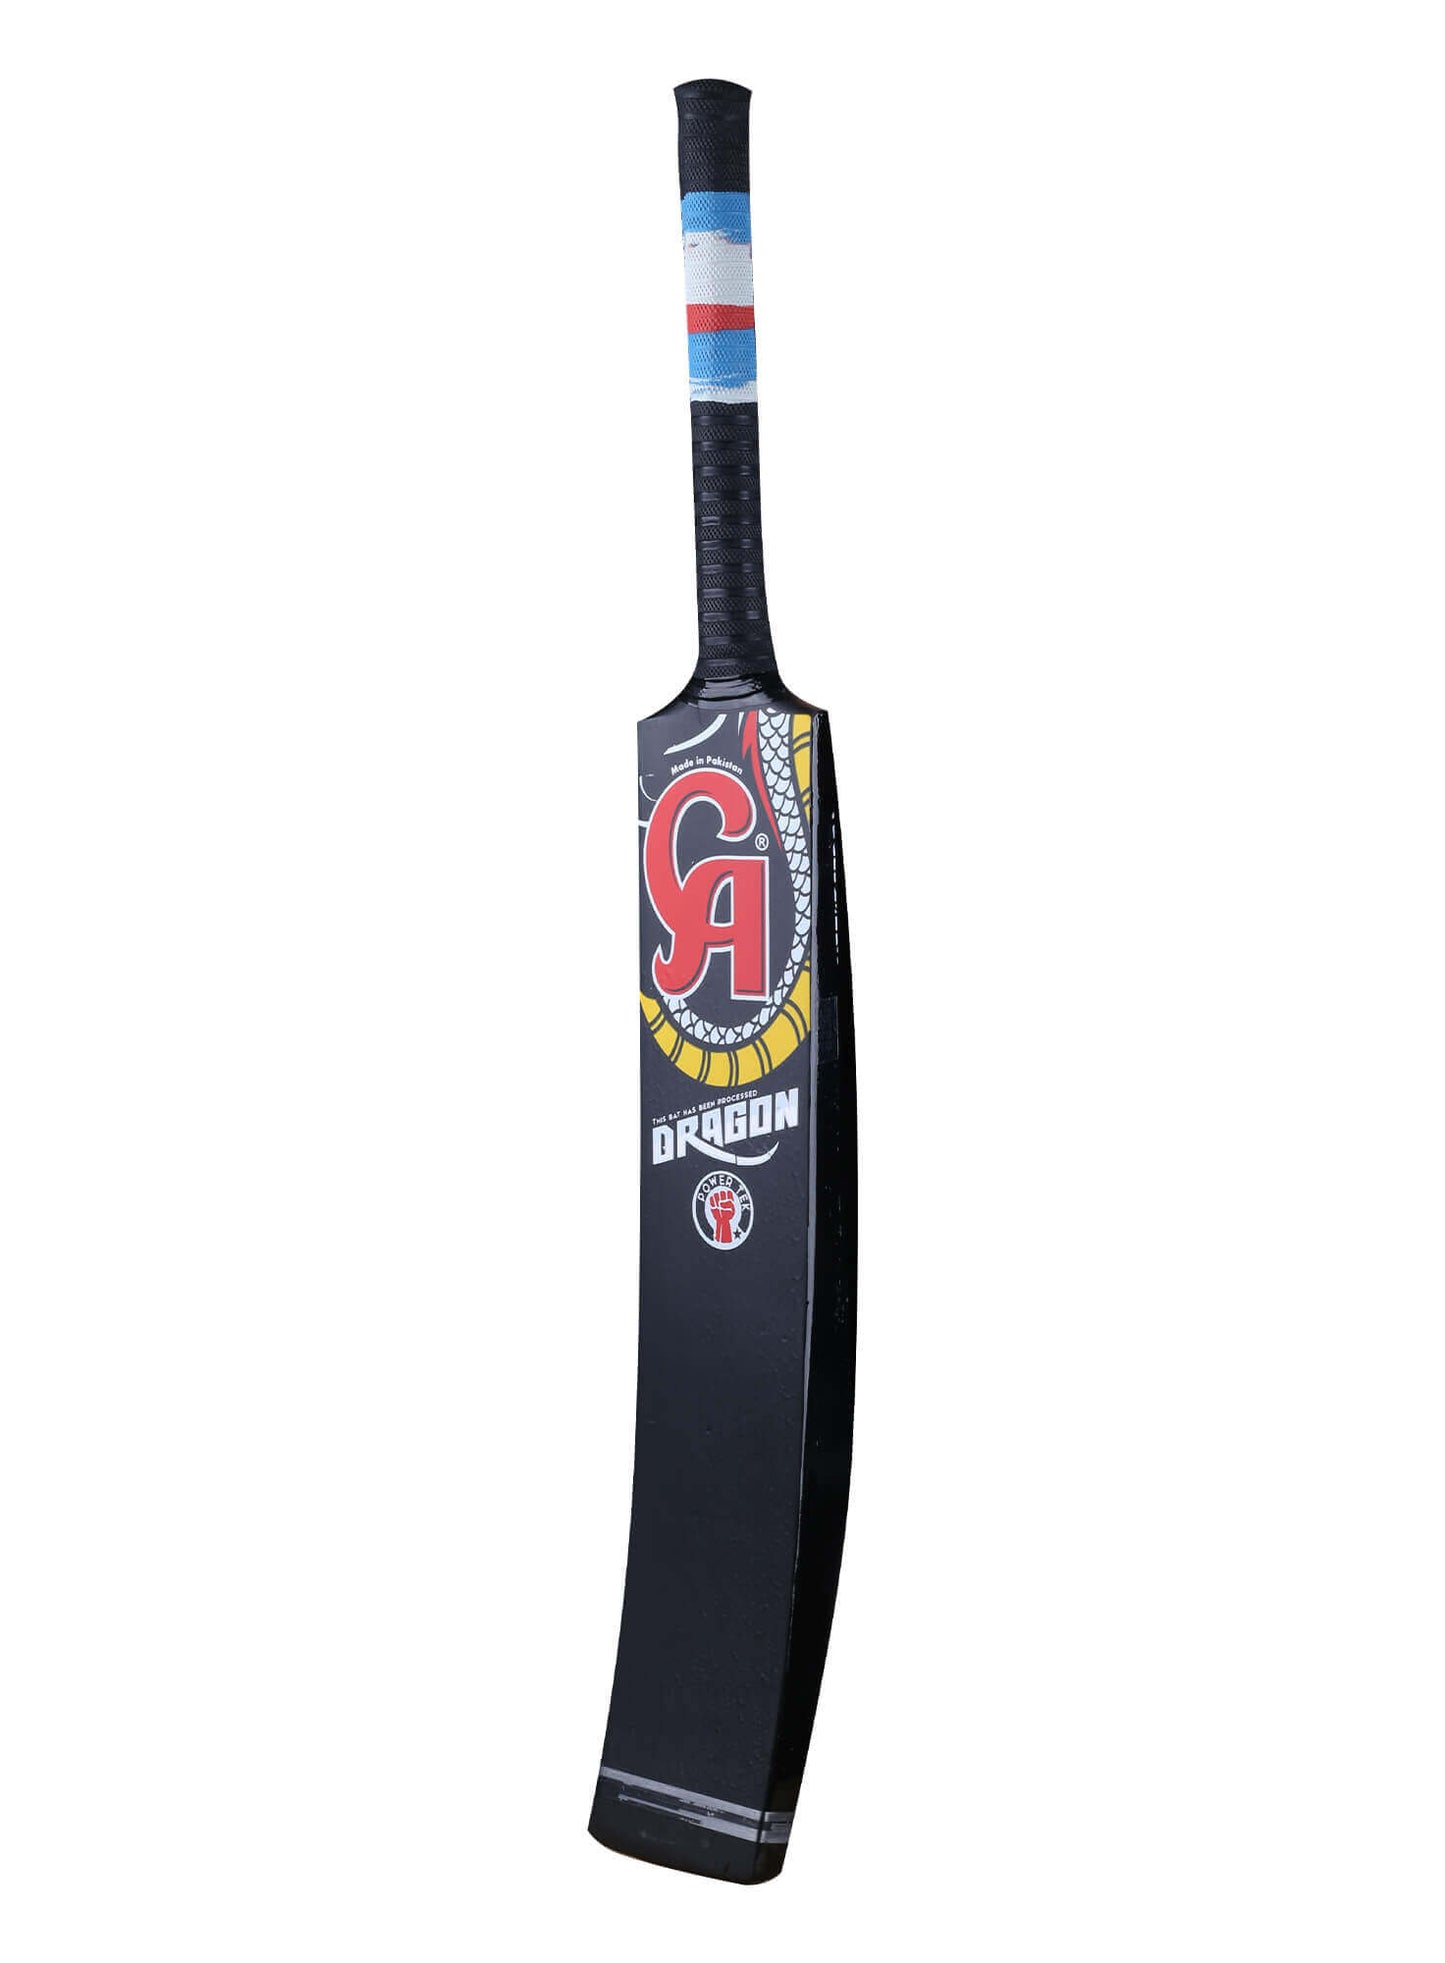 CA Dragon Power-Tek tennis ball - tape ball cricket bat (Black)